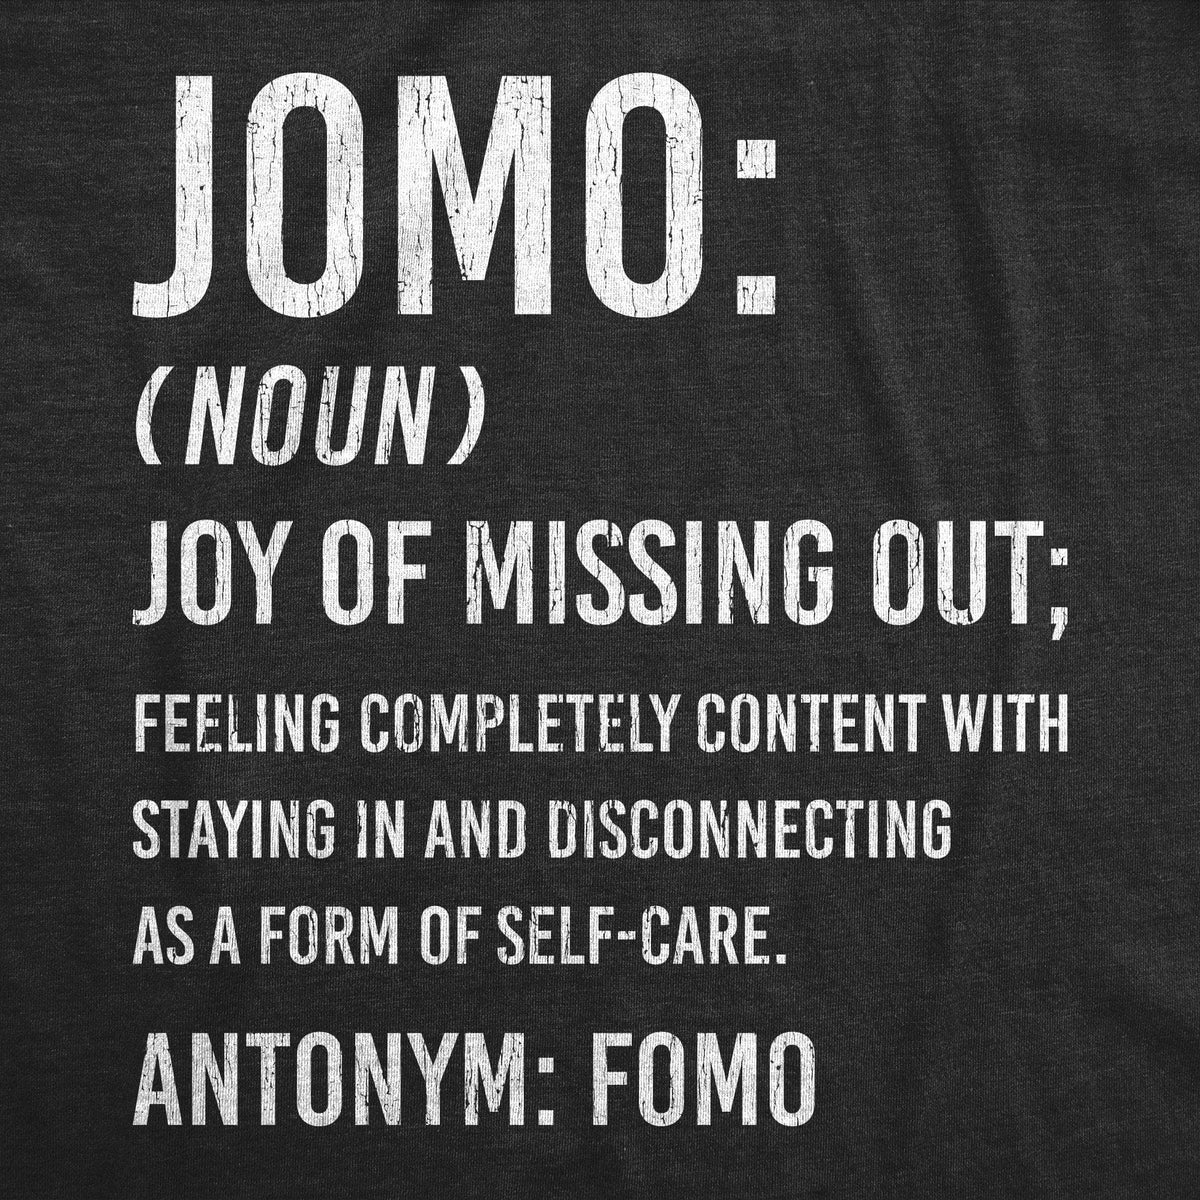 JOMO Joy Of Missing Out Women&#39;s Tshirt - Crazy Dog T-Shirts